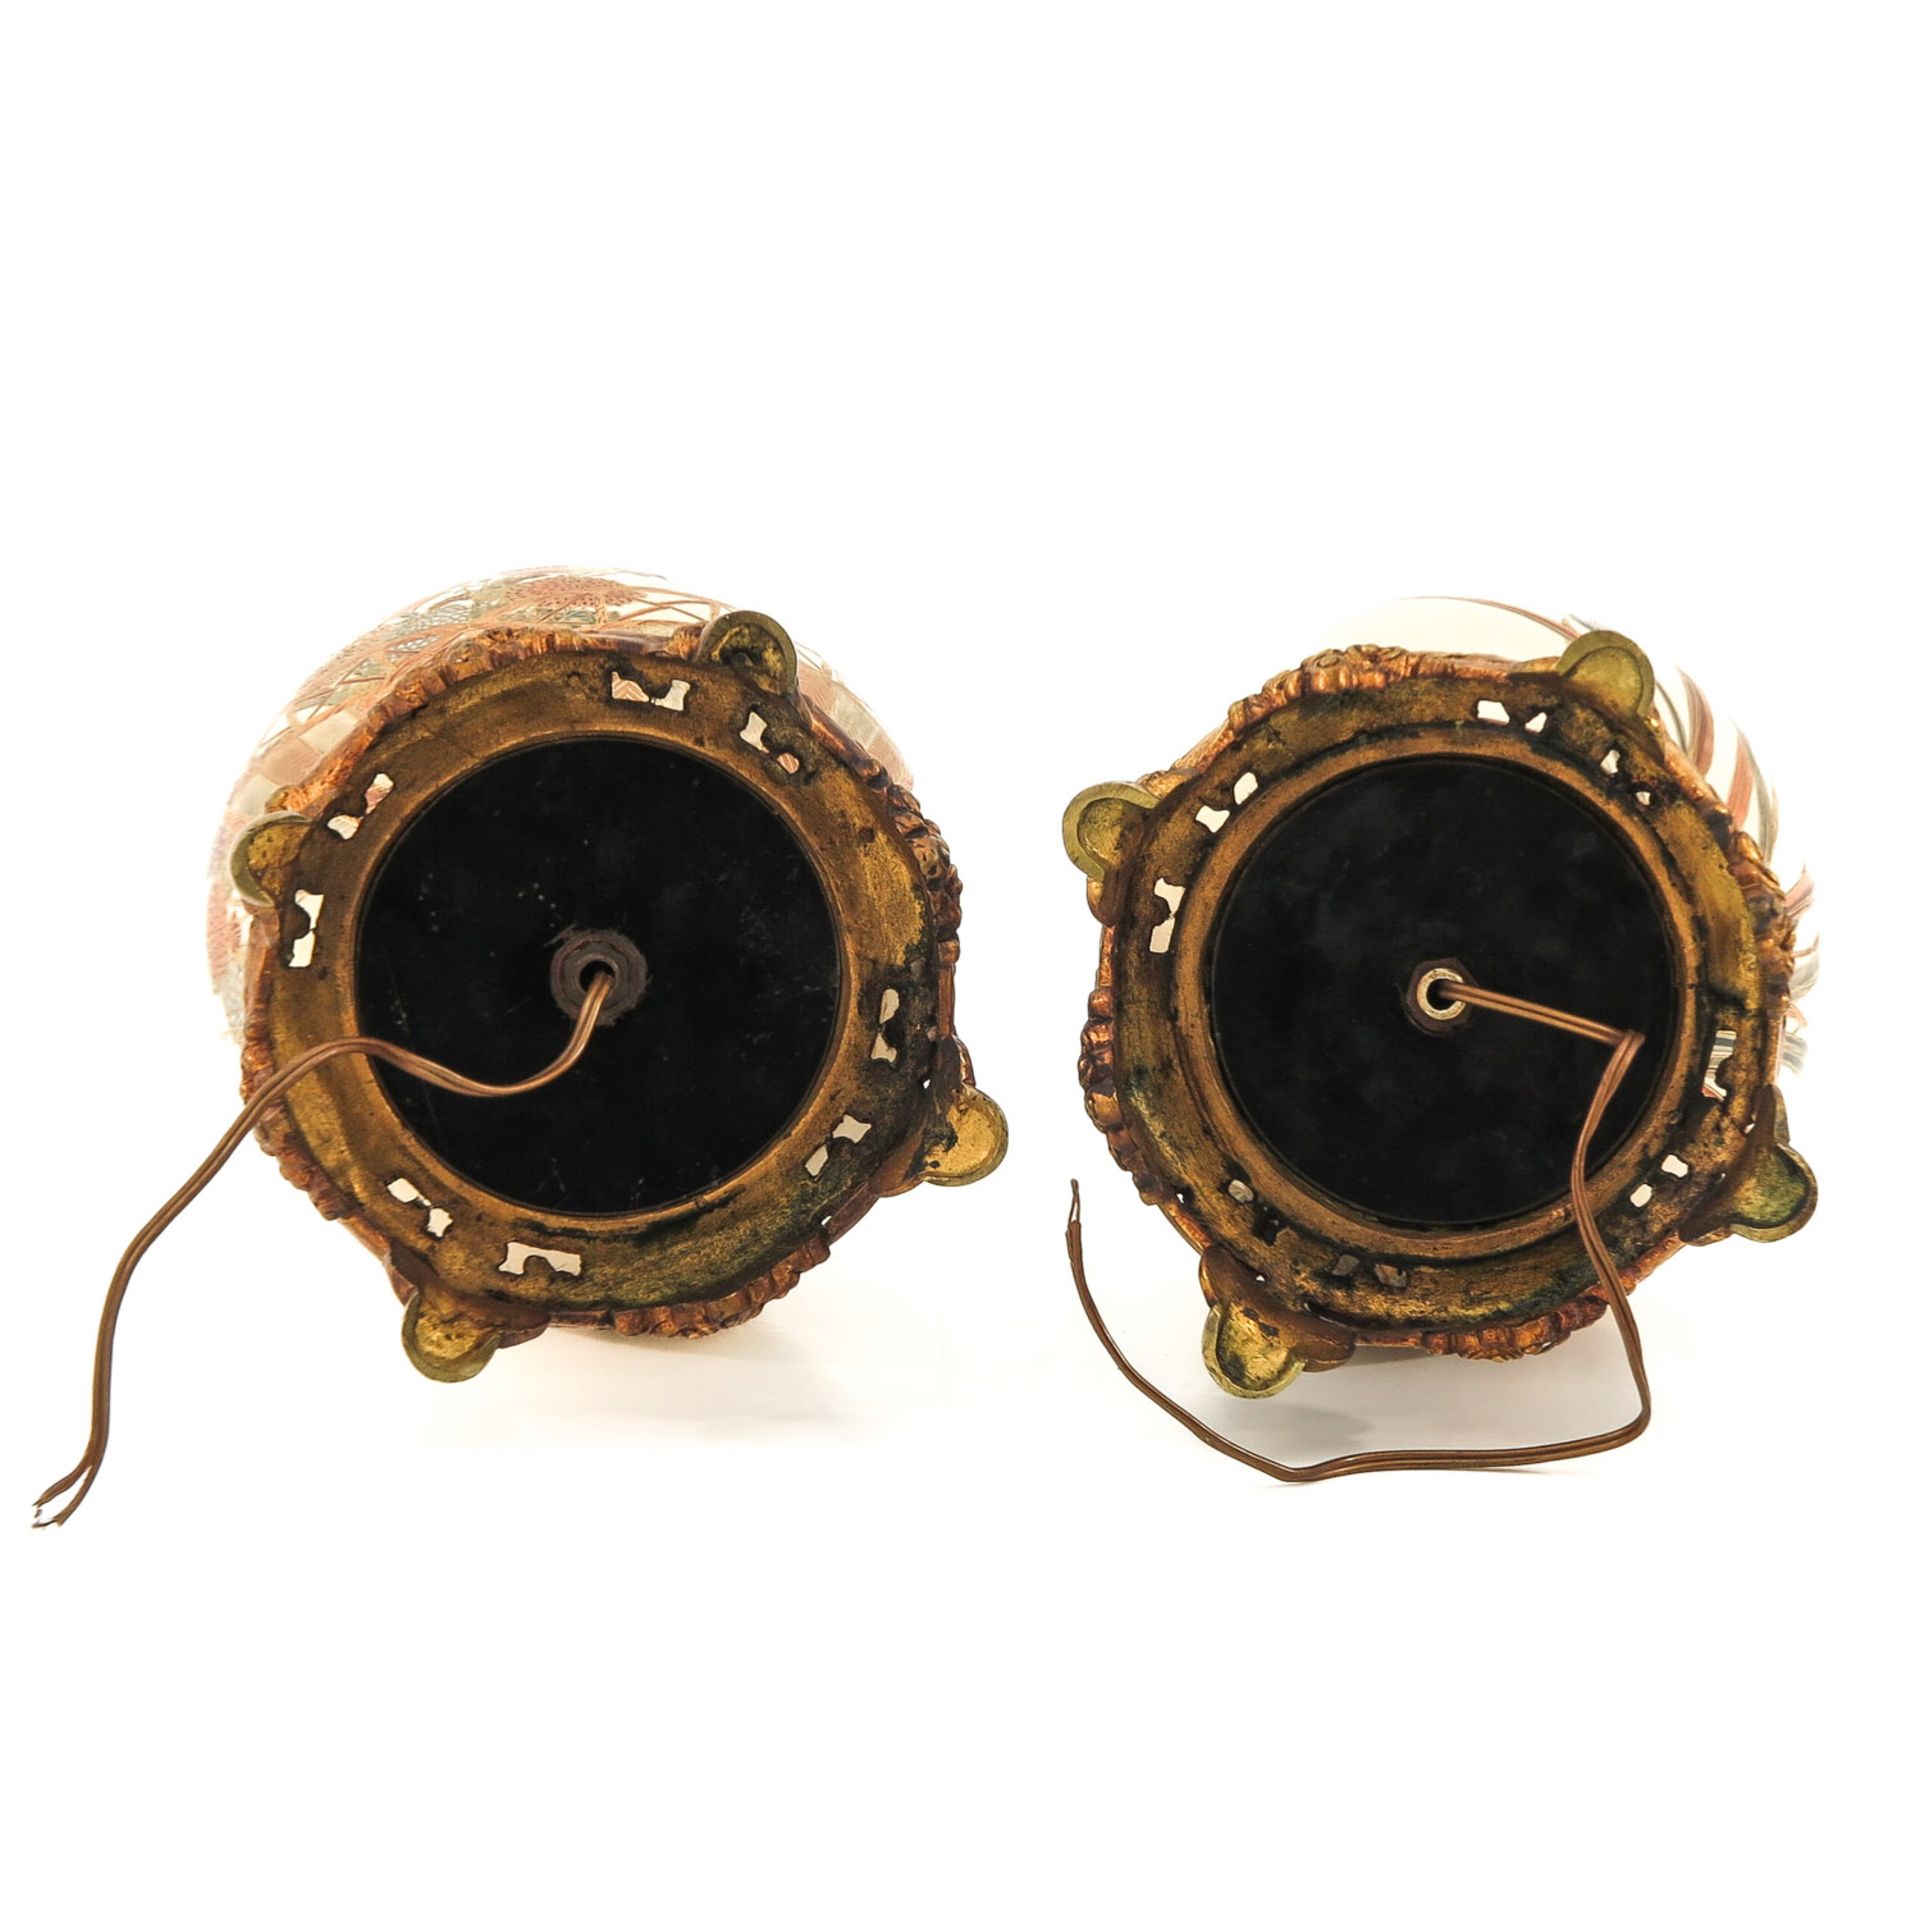 A Pair of Satsuma Lamps - Image 6 of 9